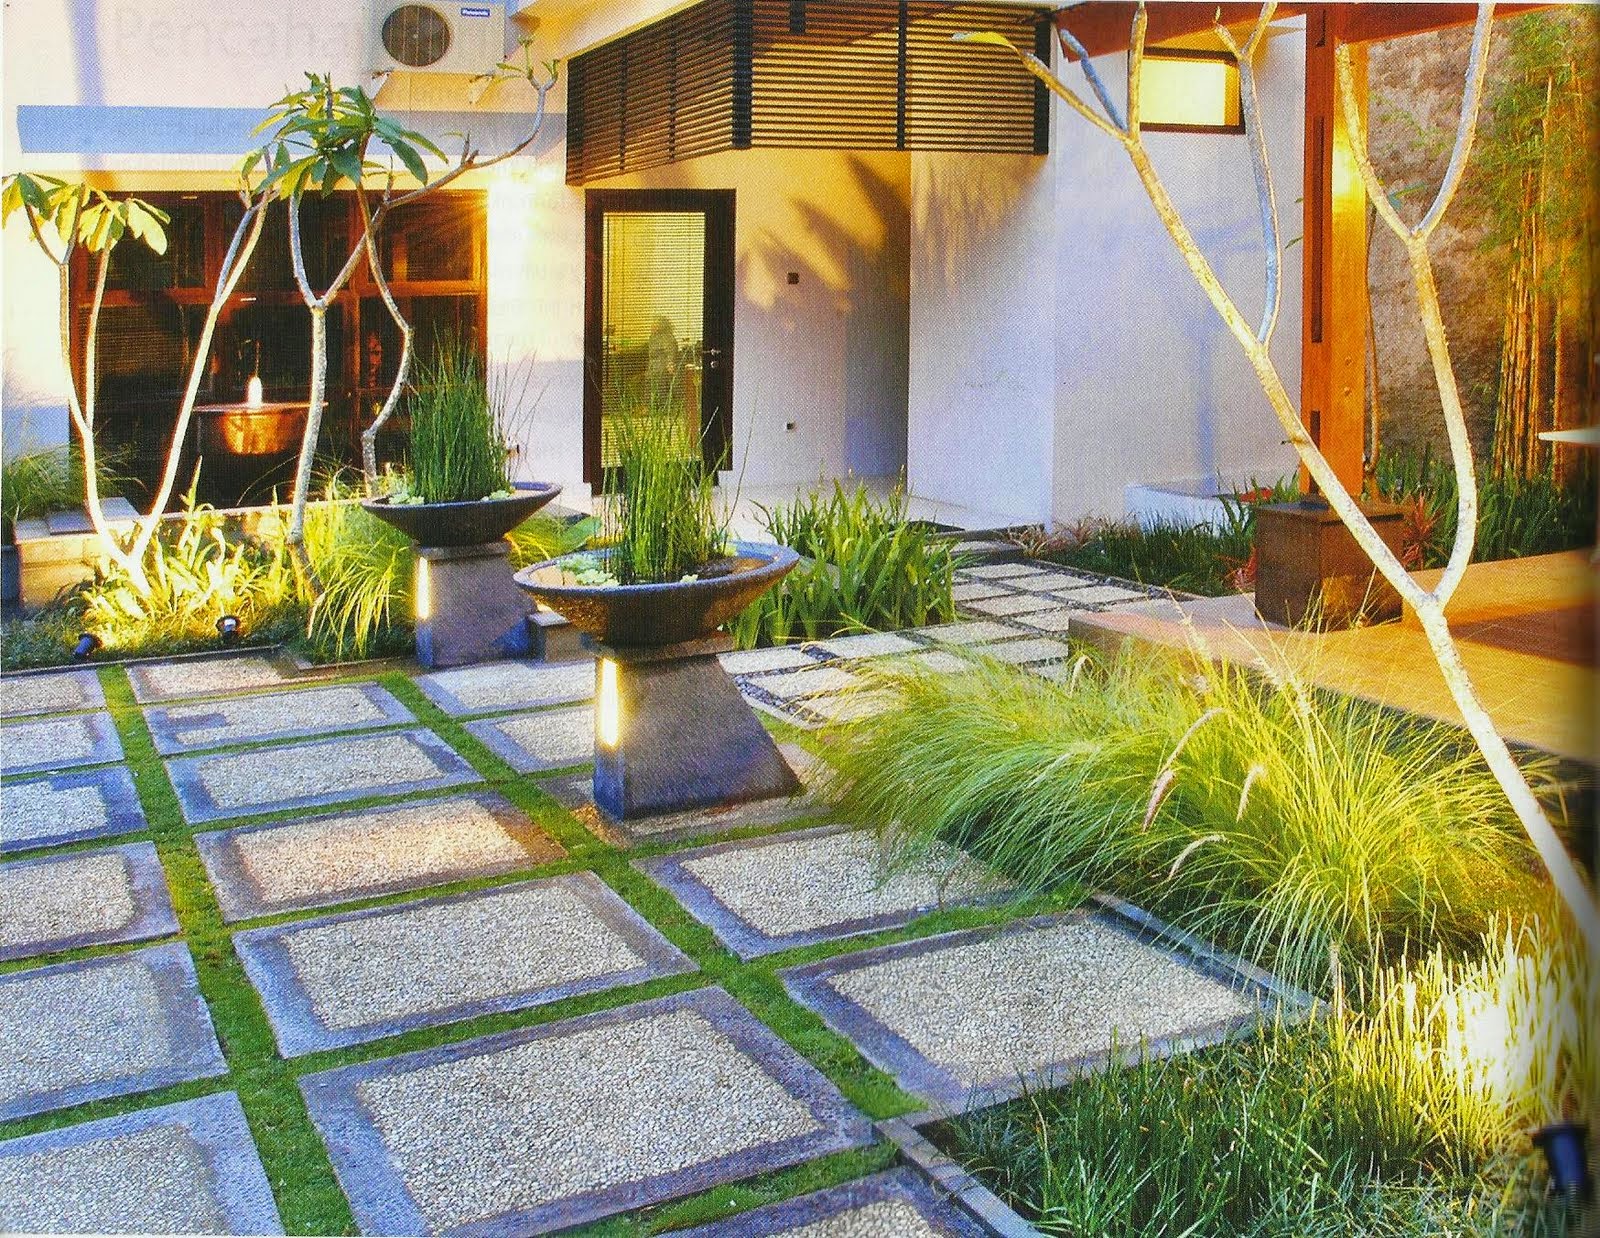  Minimalist  House Garden Design  Concept Inspiring 